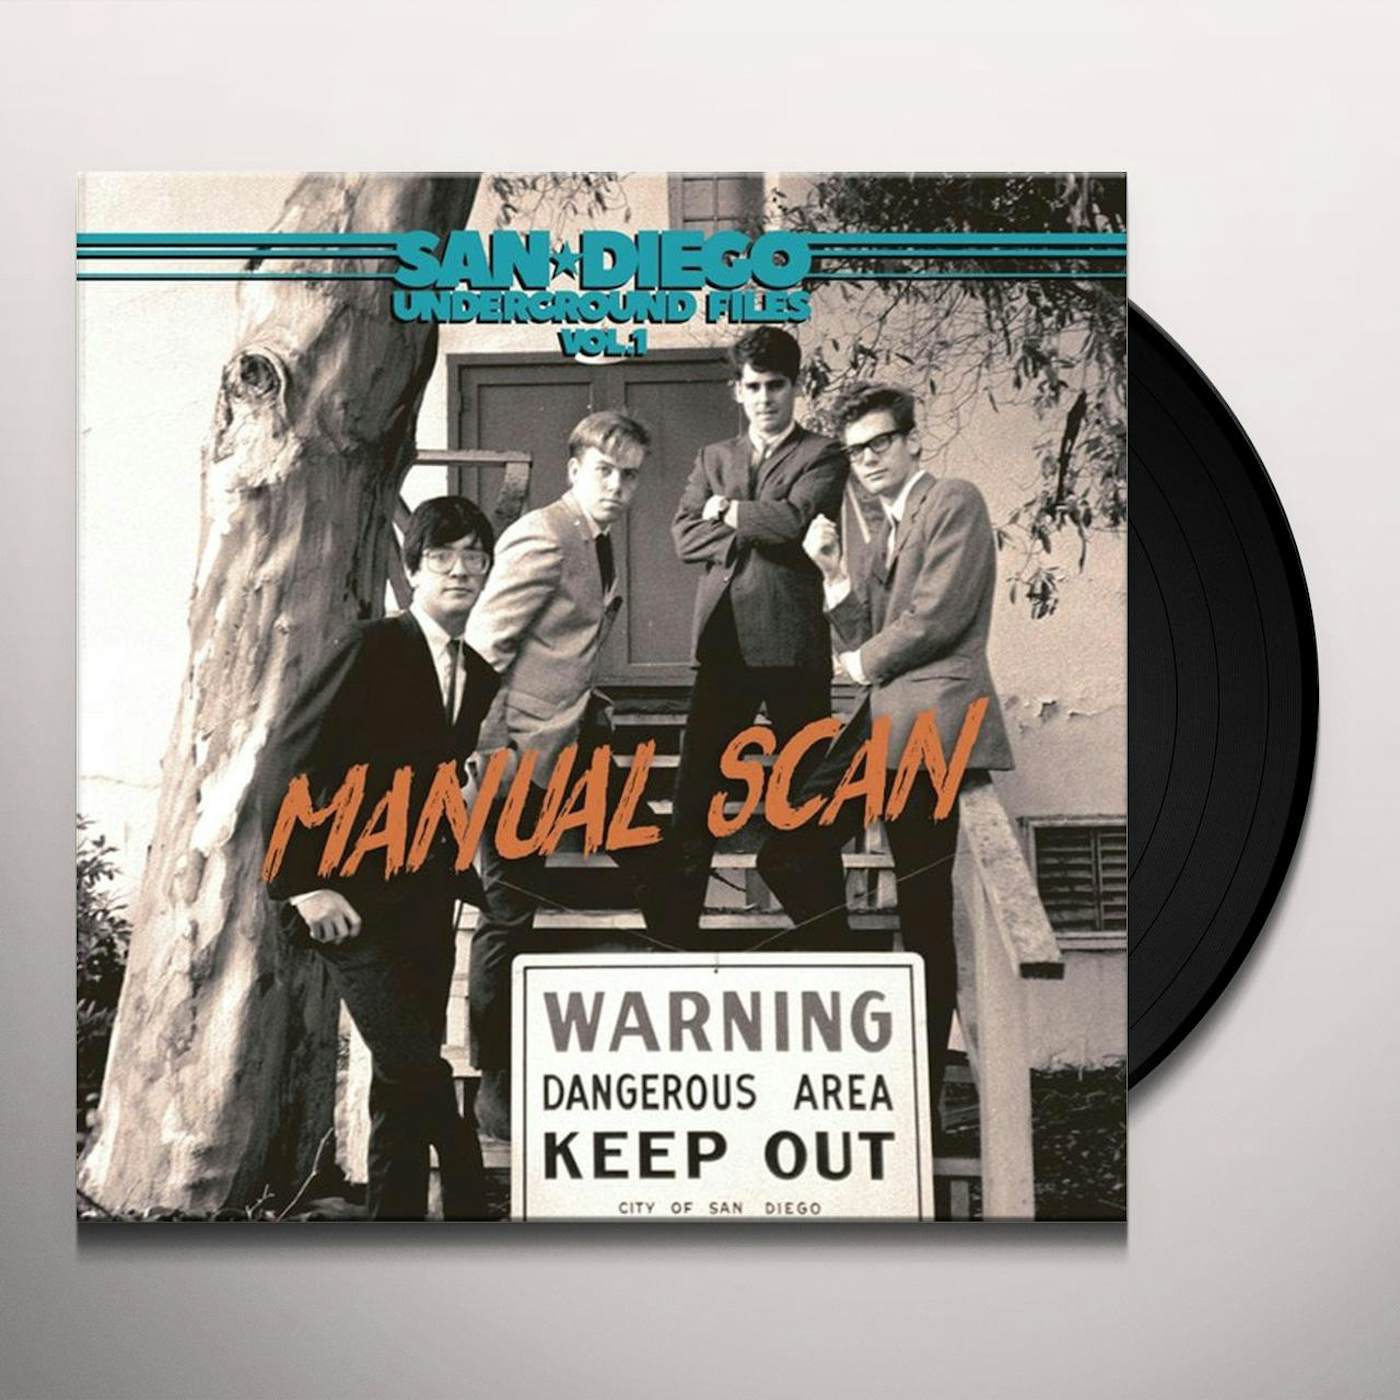 Manual Scan SAN DIEGO UNDERGROUND FILES VOL 1 Vinyl Record